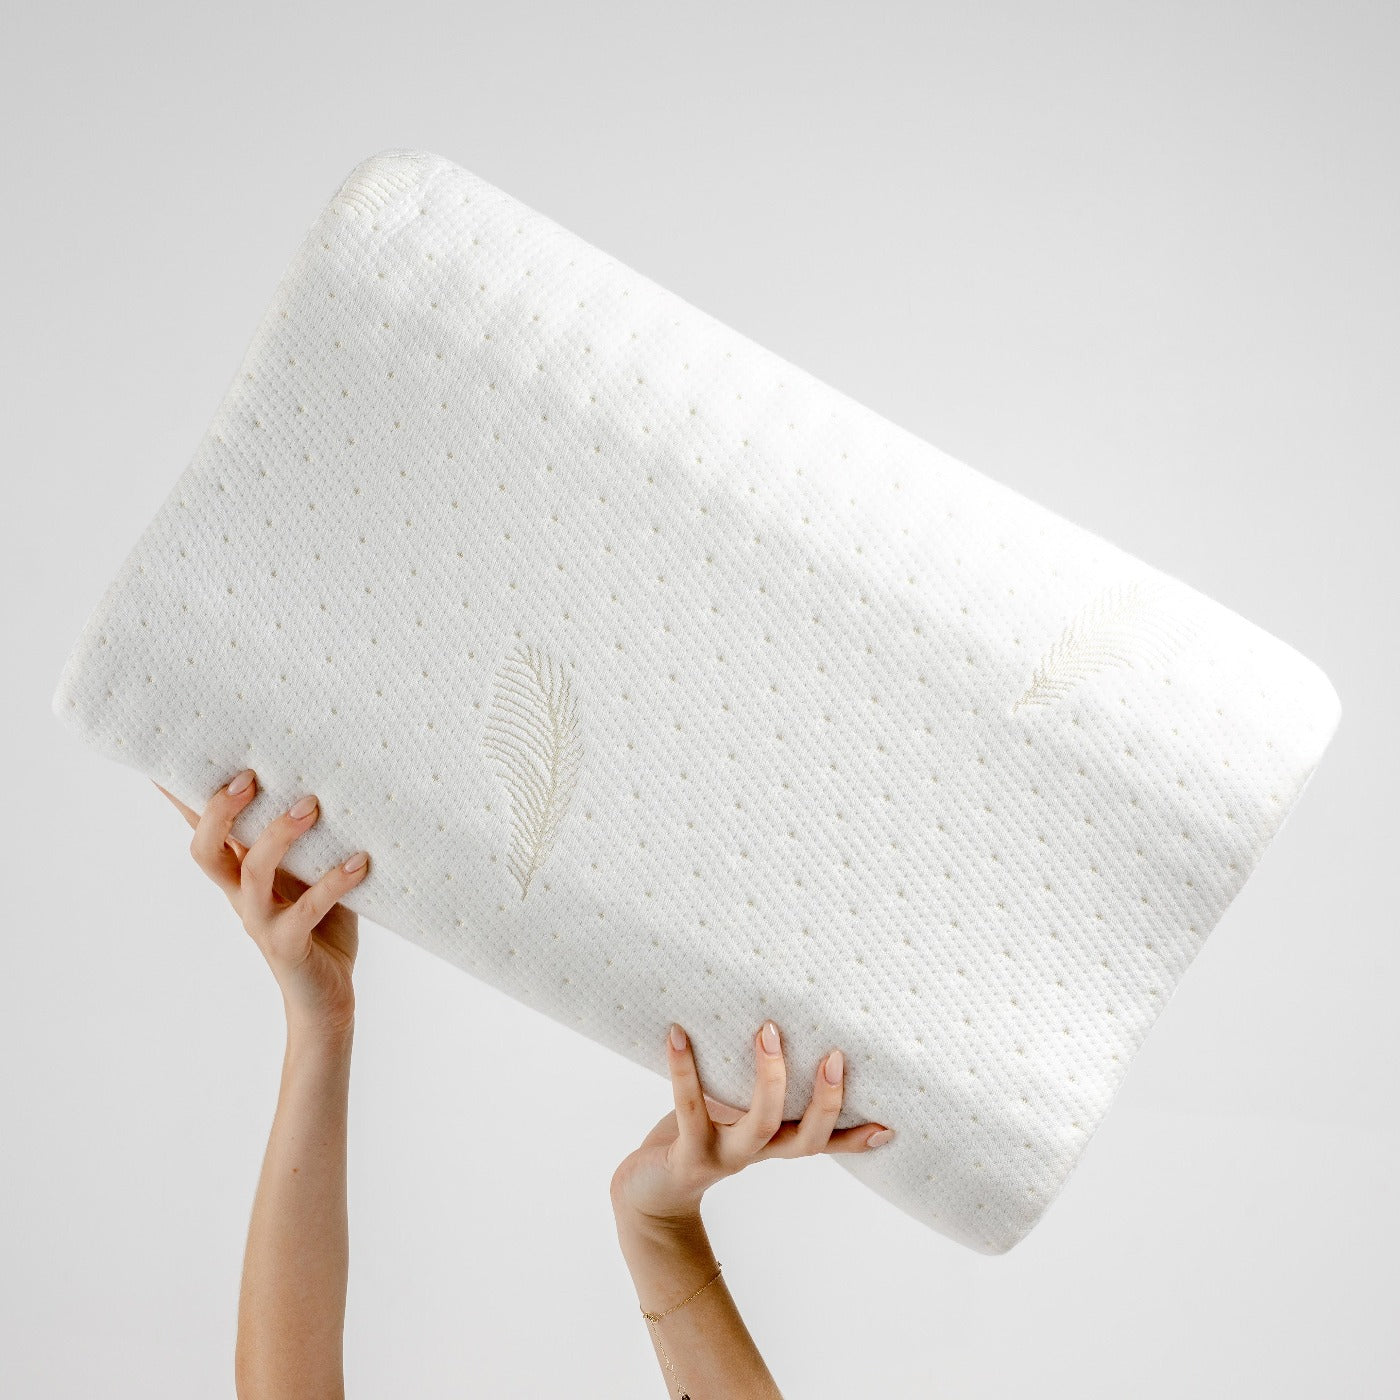 The Muscle Mat Sleeping Pillow - Pillow in air - Muscle Mat Adjustable Foam Pillow which is Best Adjustable Foam Pillow of Australia